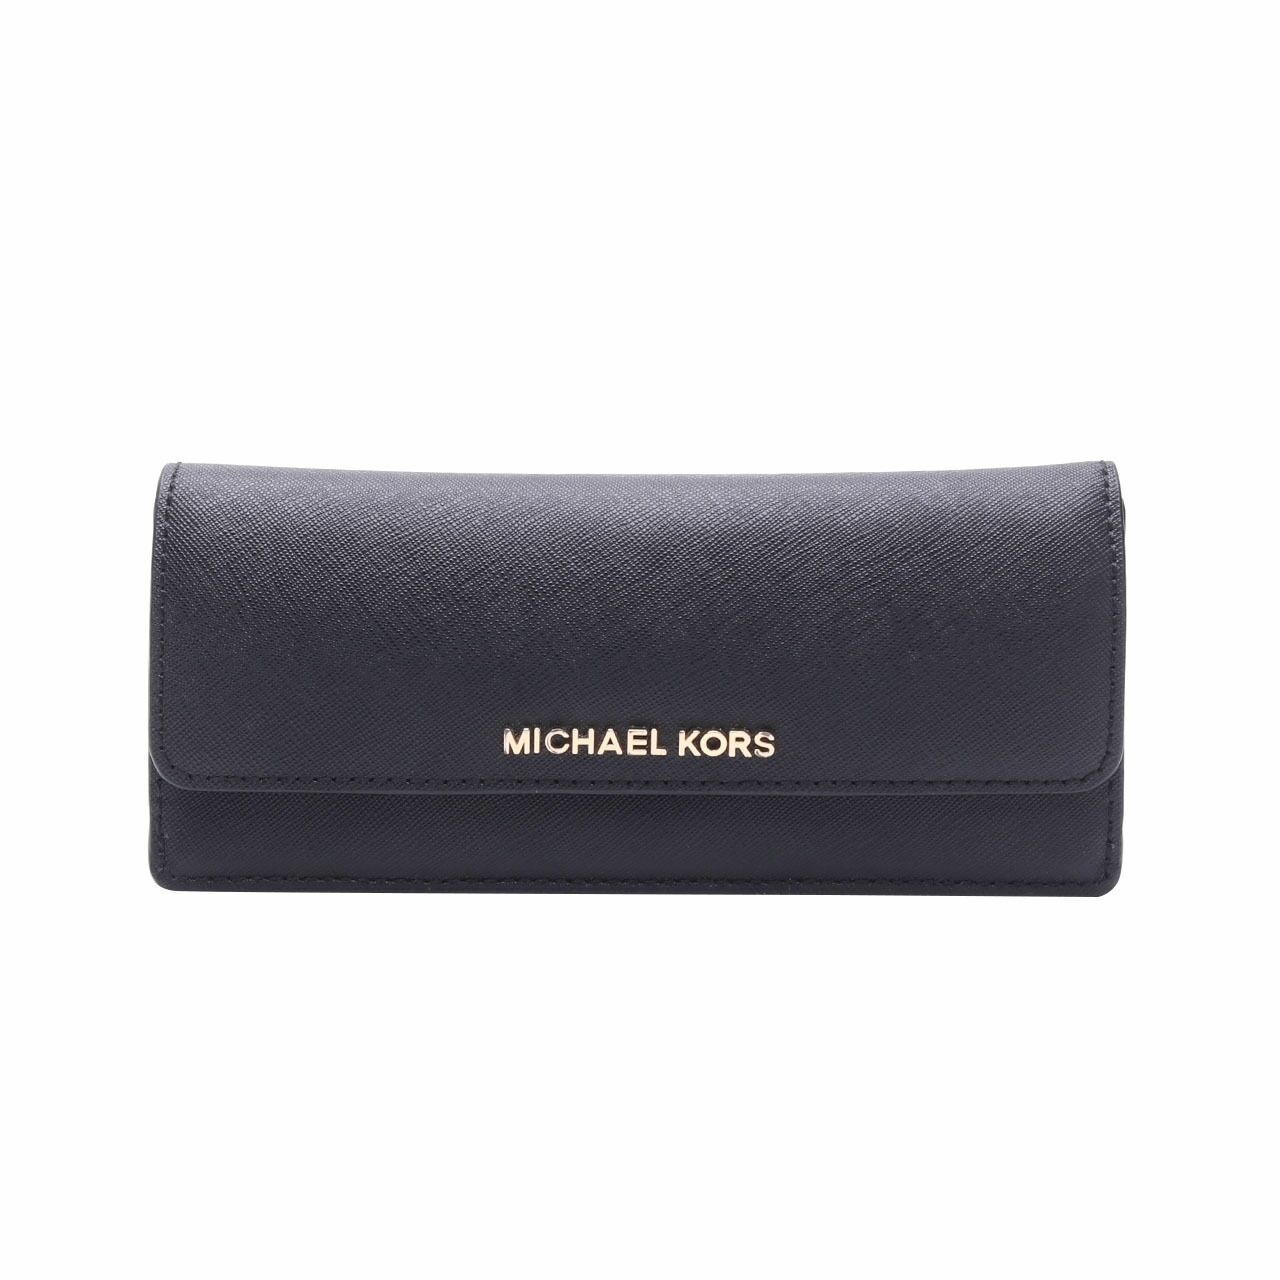 Michael Kors Black Long Jet Set Wallet 